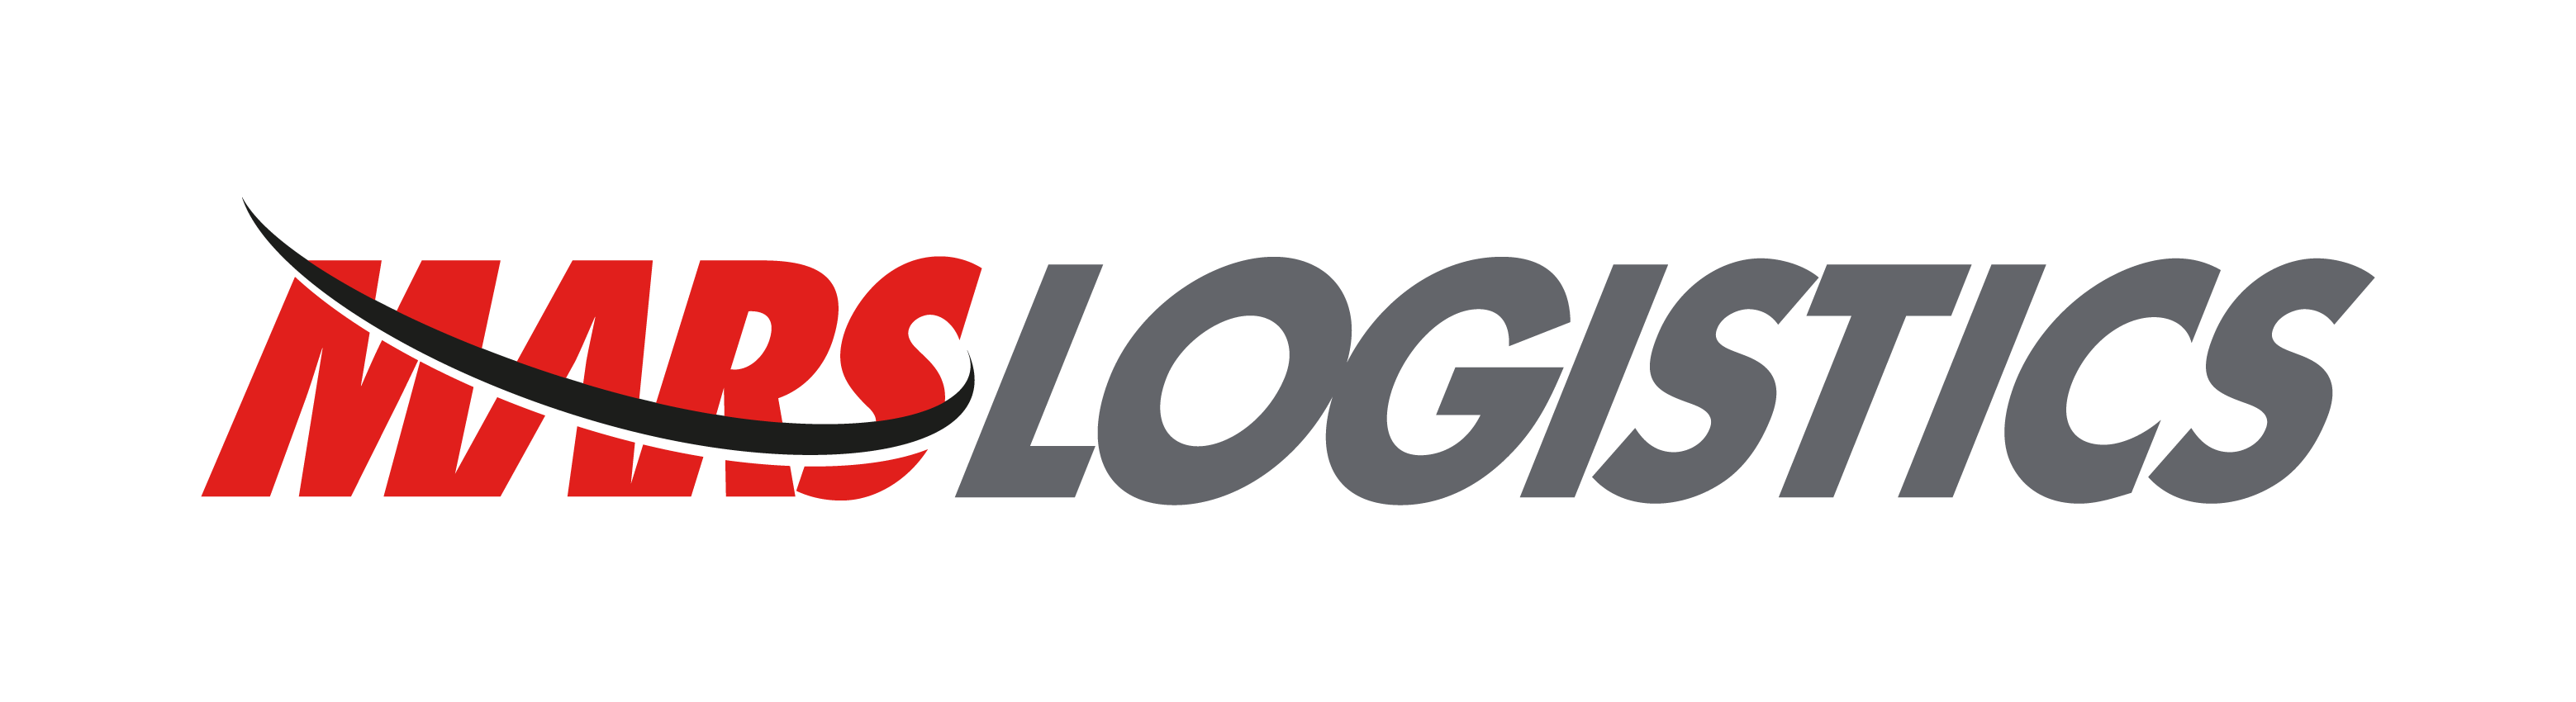 Mars Logistics Logo